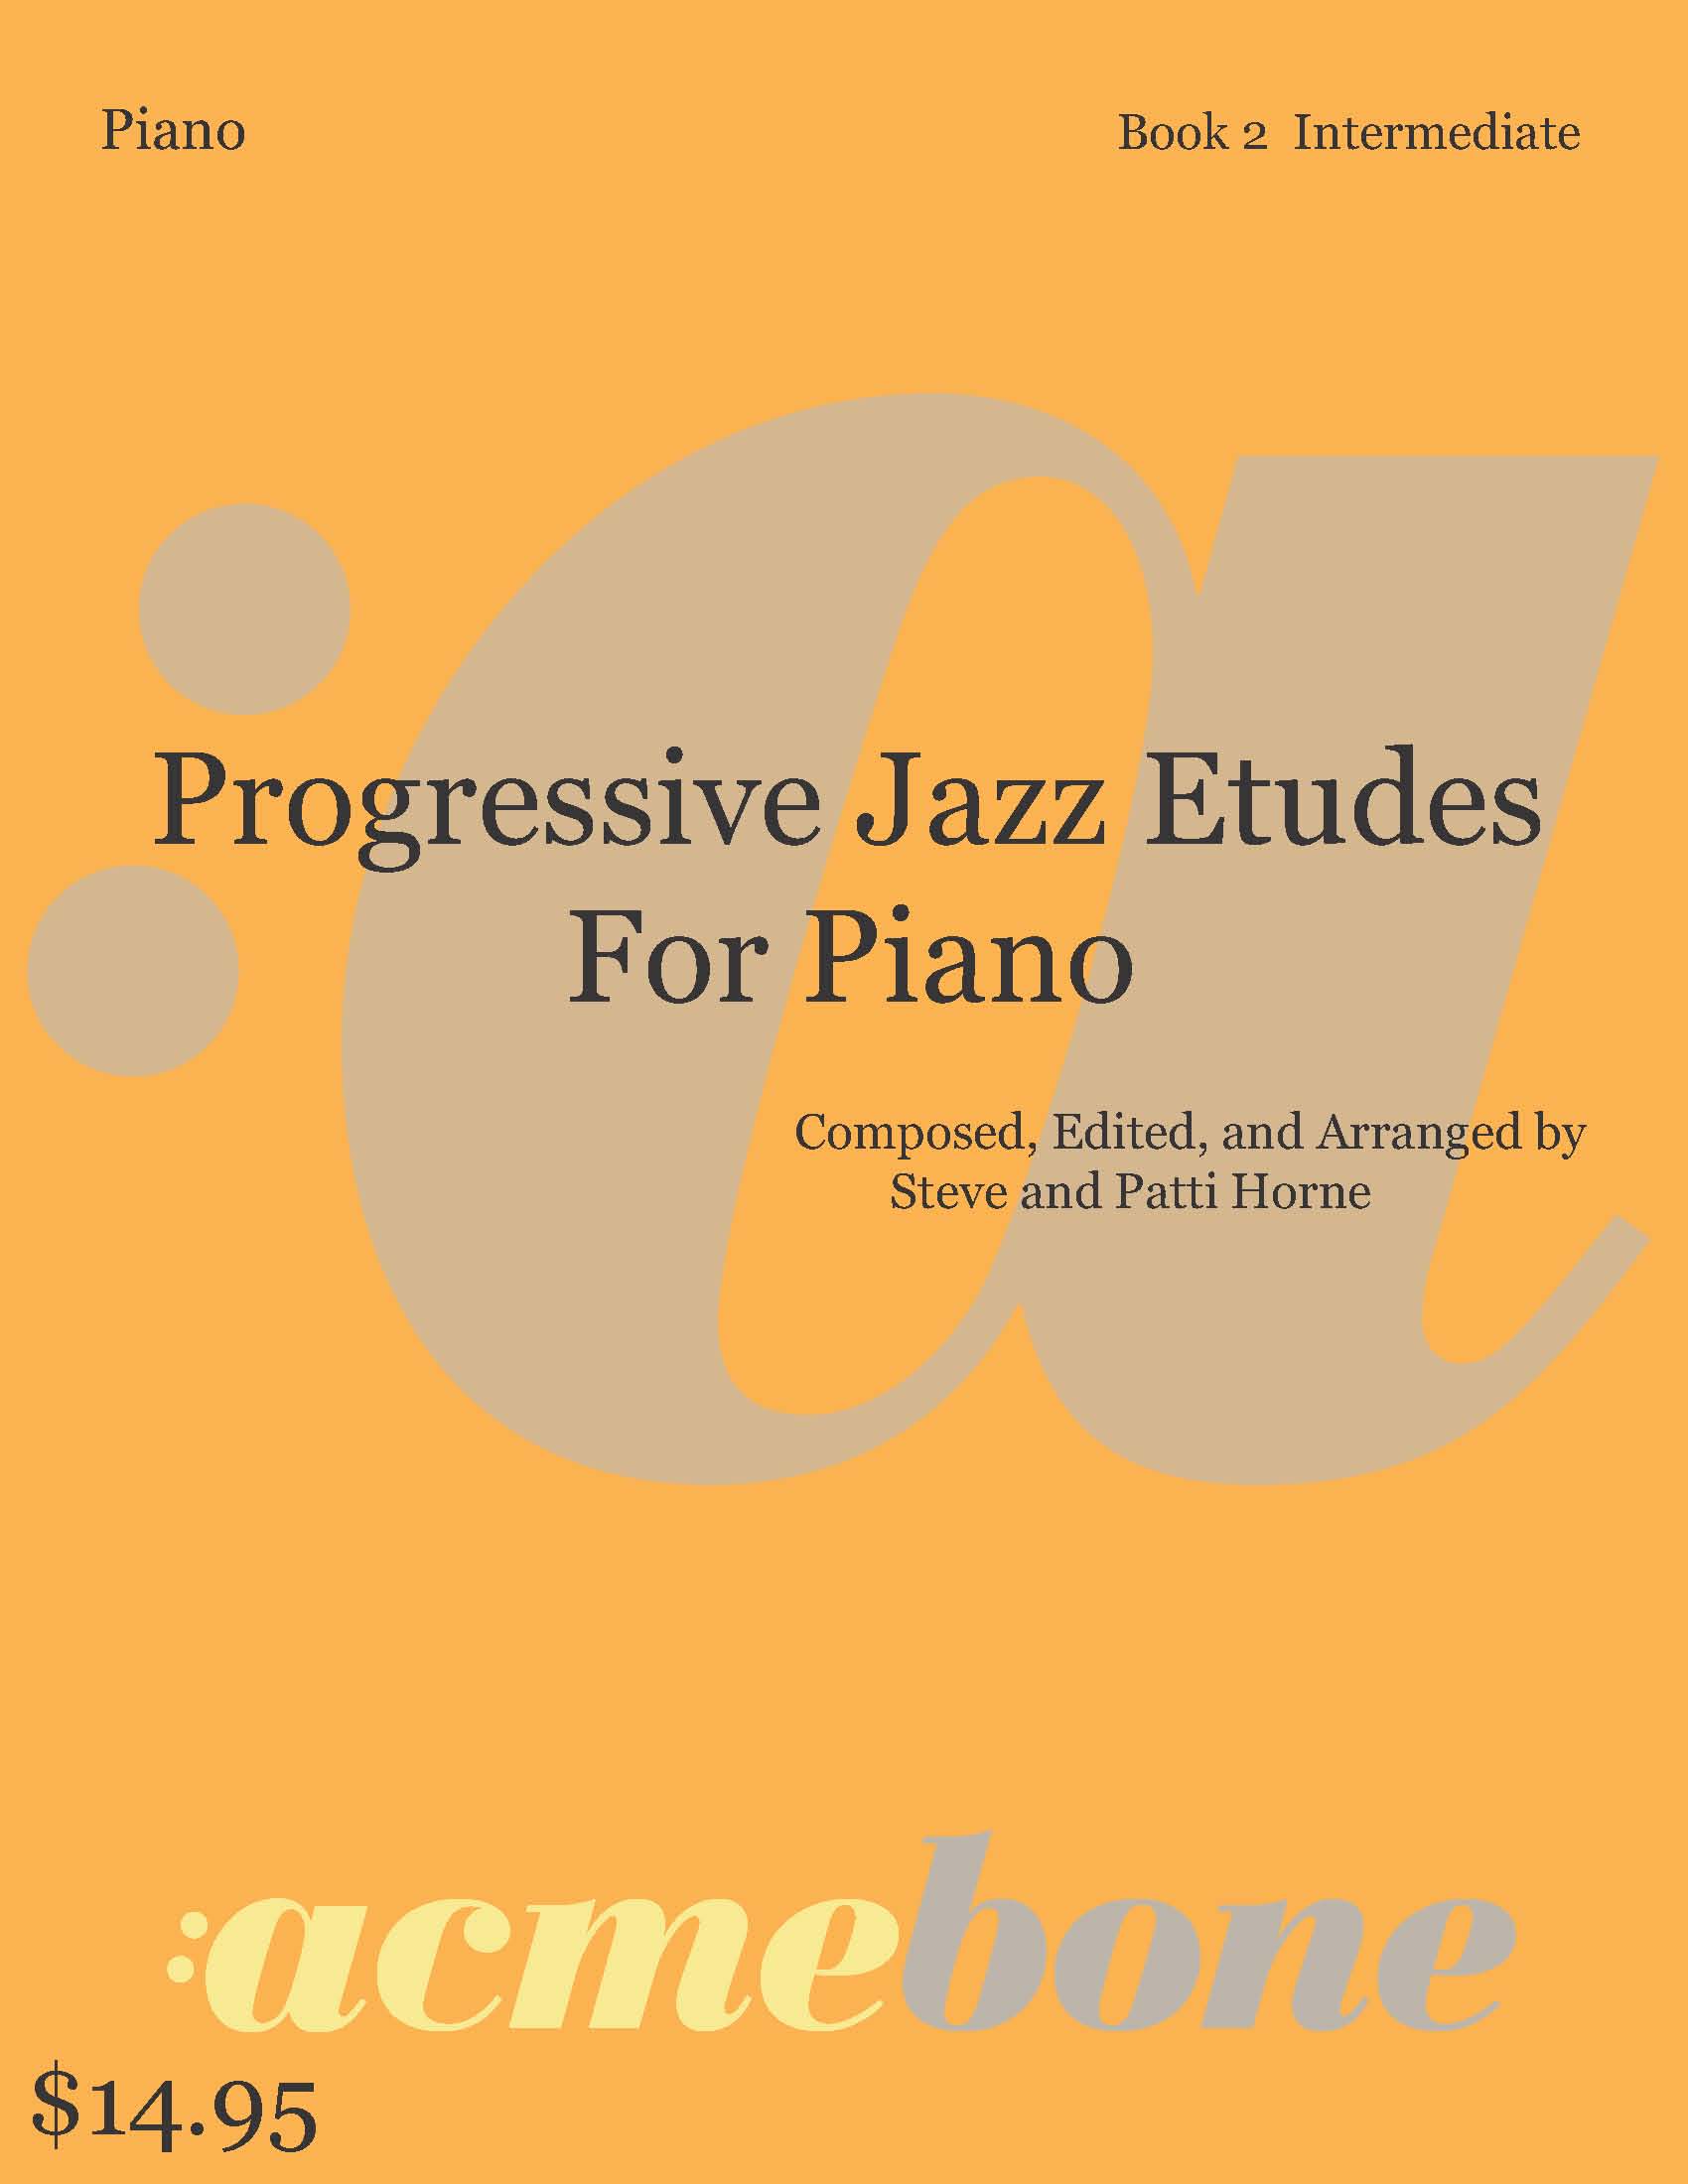 Piano Etudes_cover_book2_price.jpg